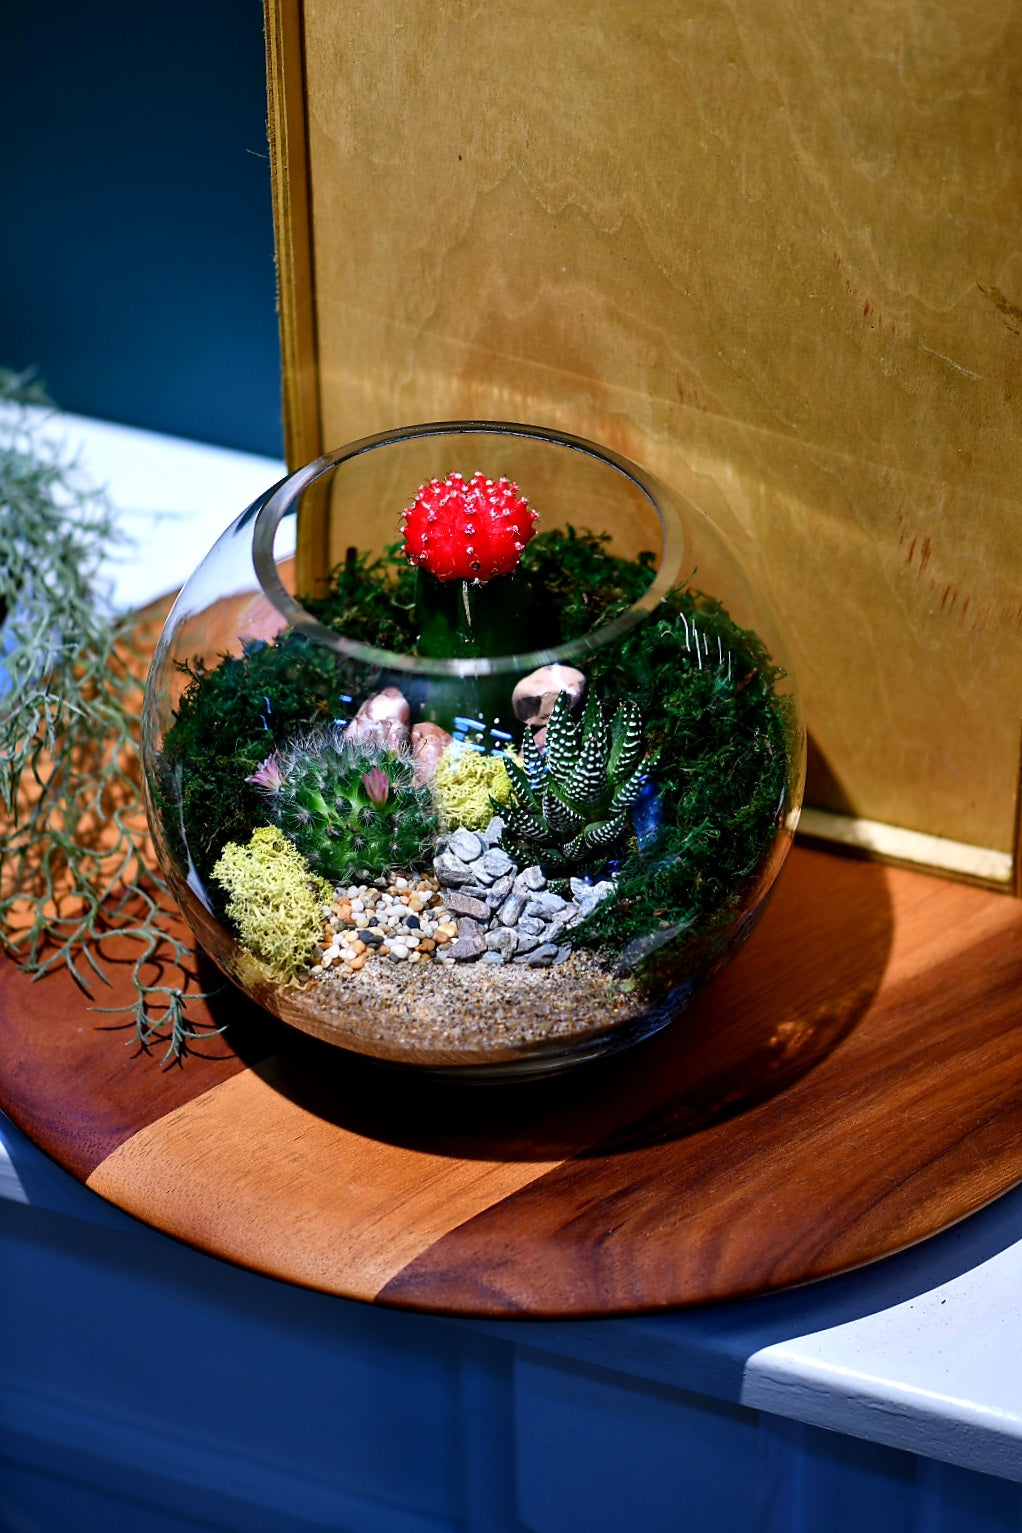 Fishbowl Terrariums (Ready-made or DIY)